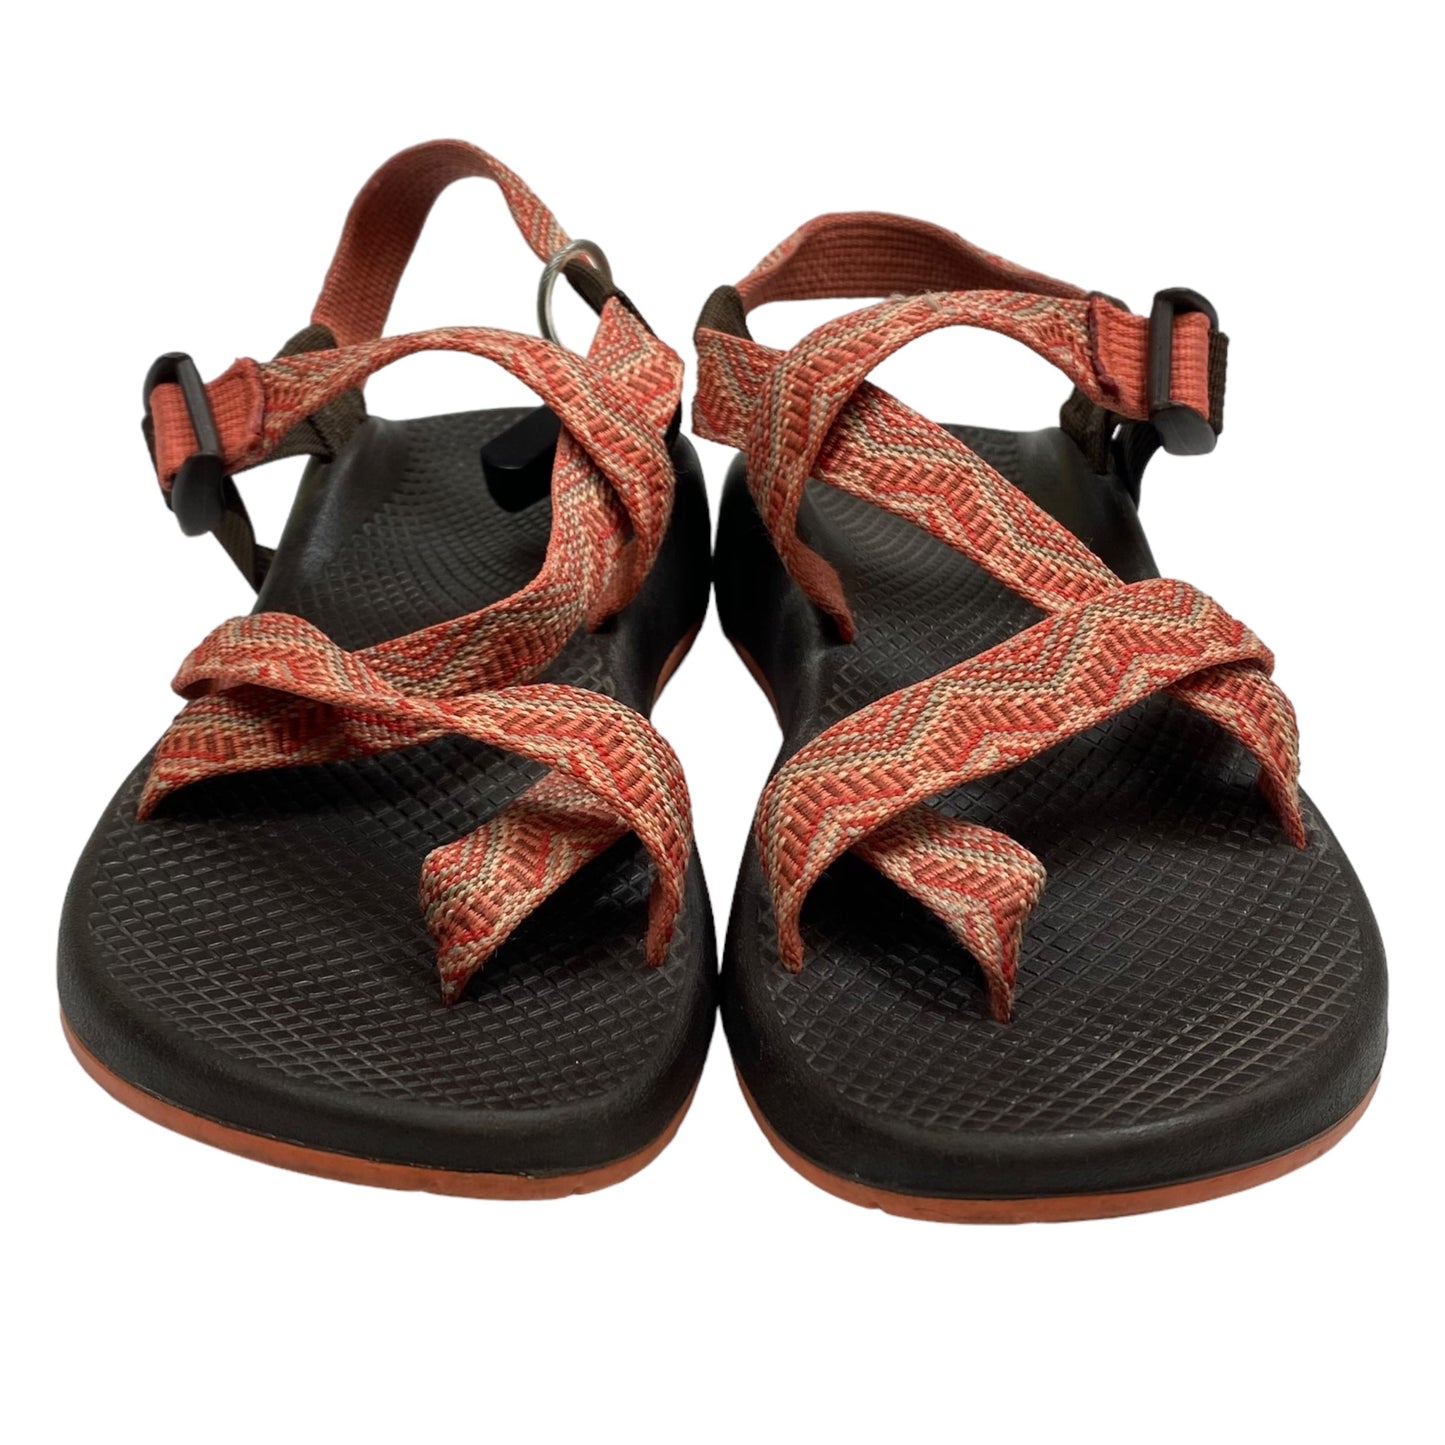 Orange Sandals Sport Chacos, Size 8